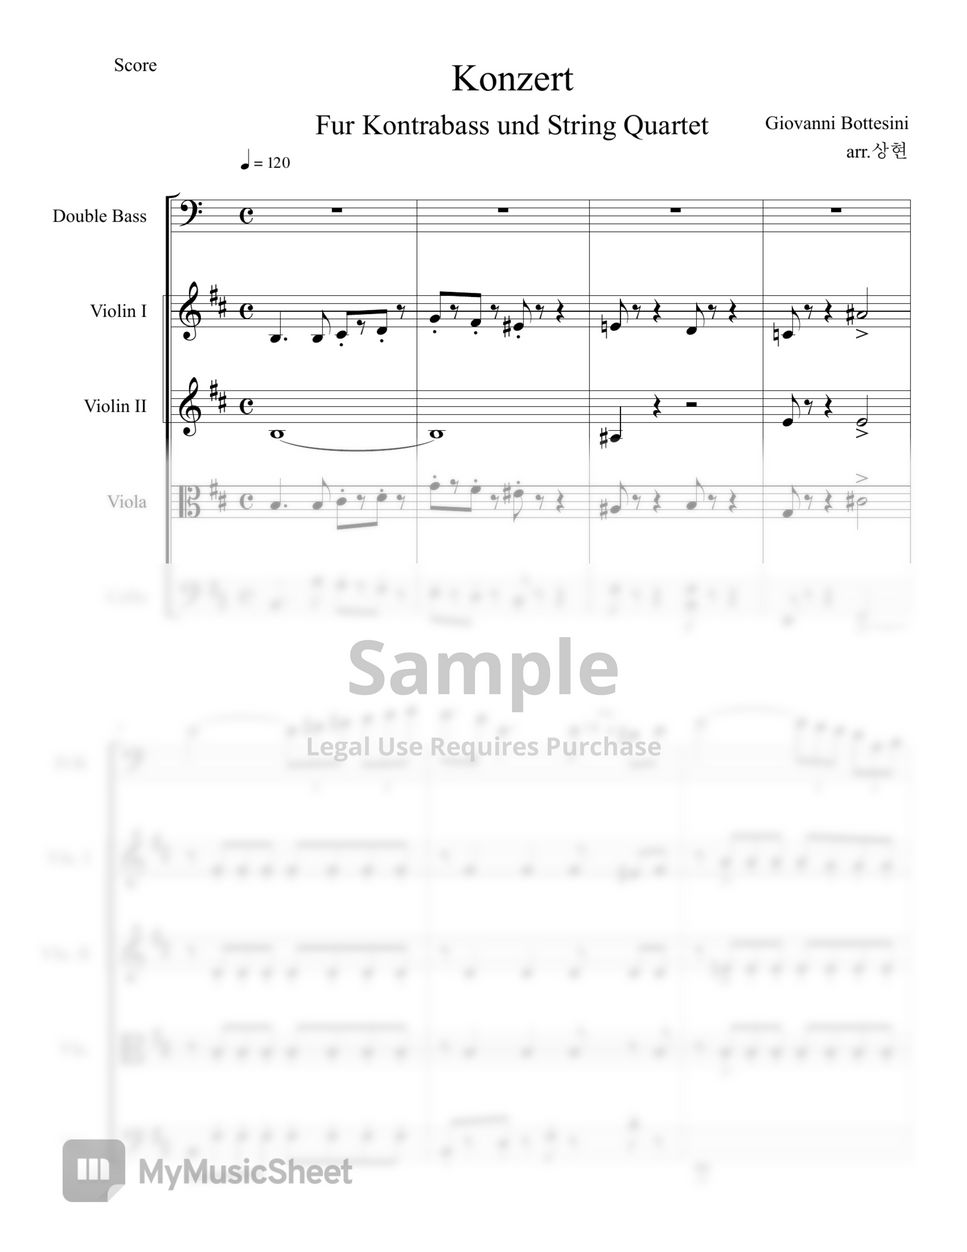 giovanni bottesini - Concerto for Double Bass No. 2 1st movemonet in B Minor String Quartet Accompaniment by SangHyeon